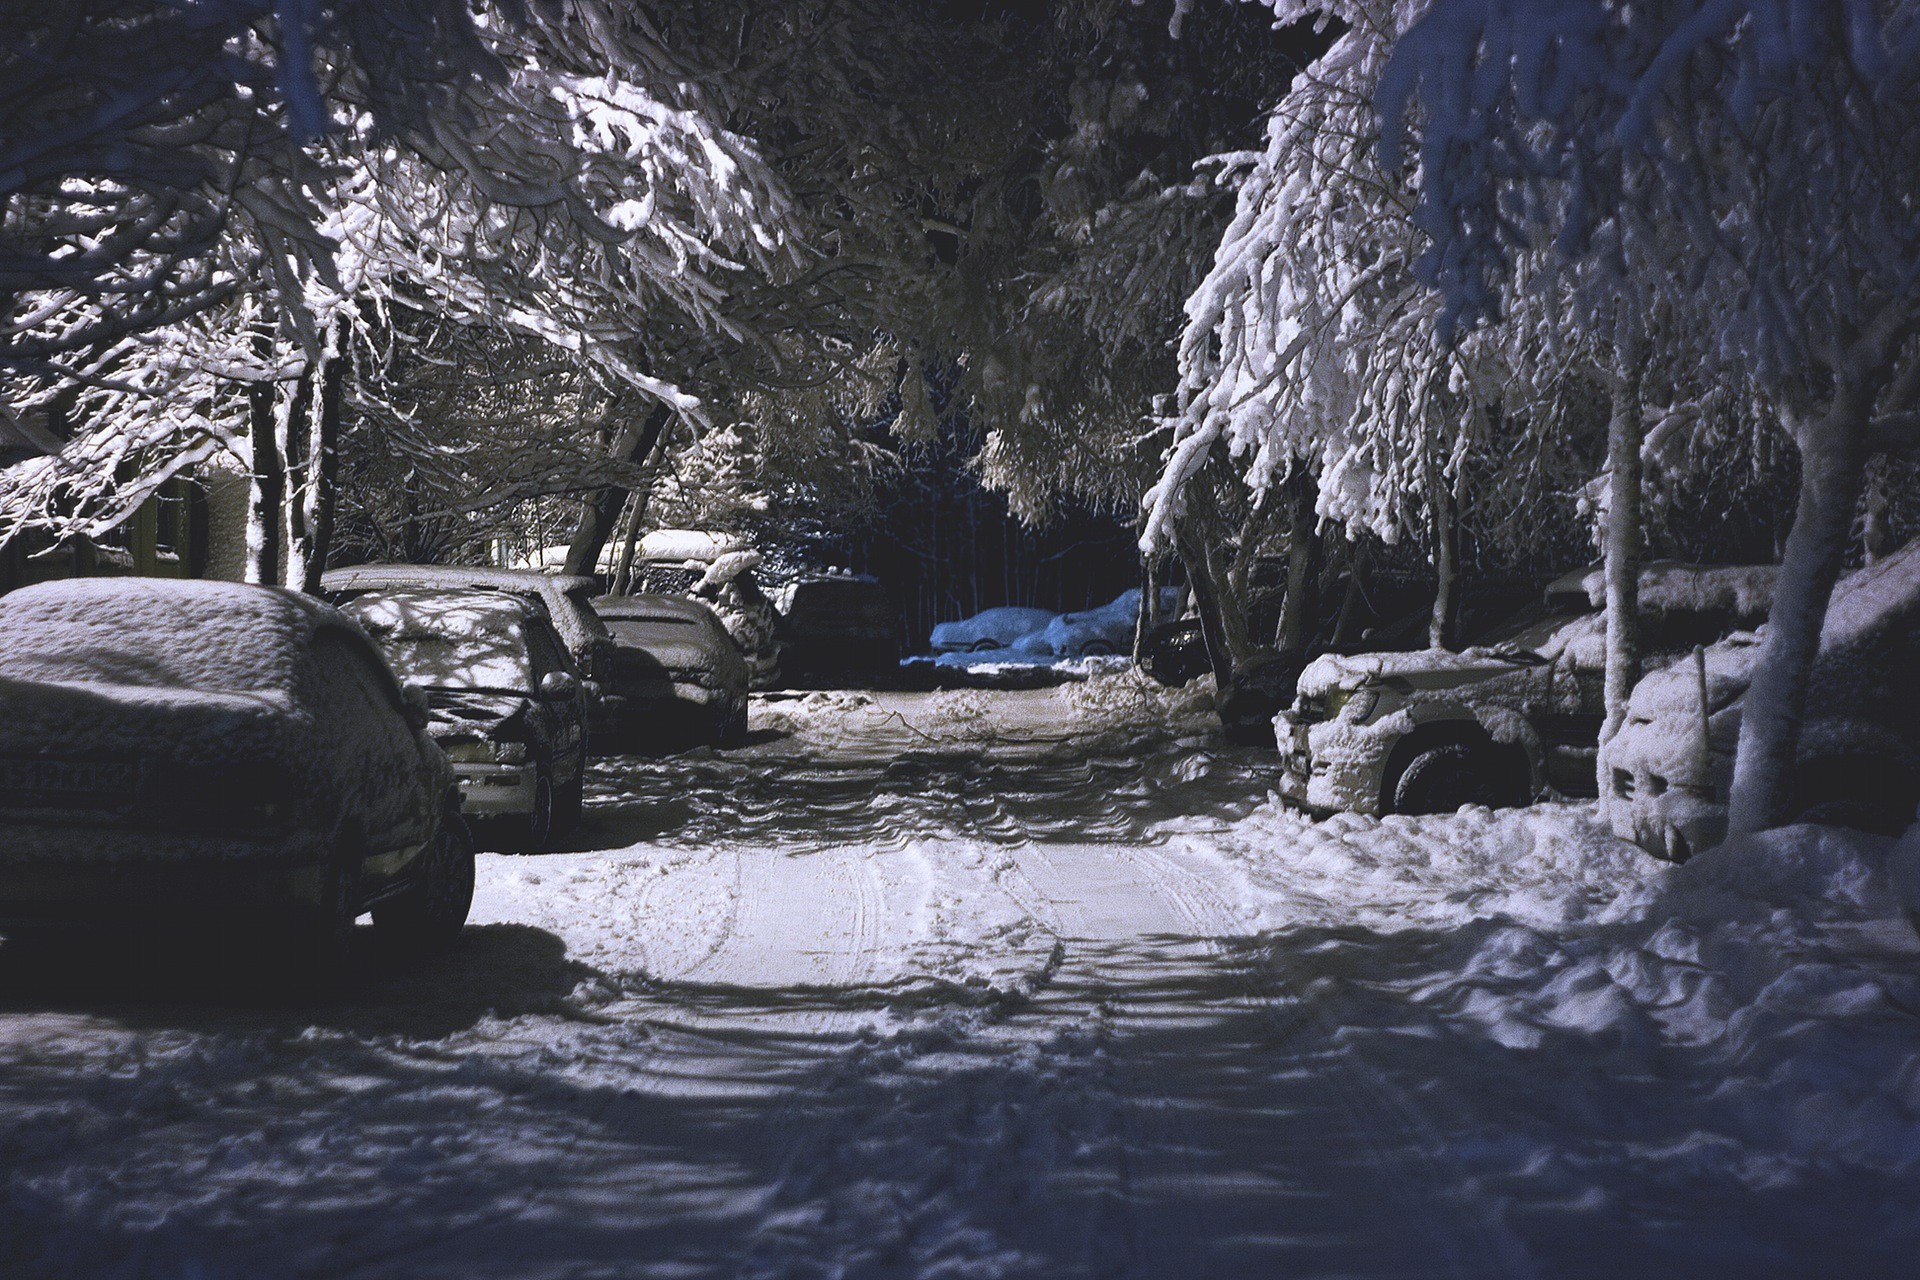 General 1920x1280 winter landscape night parking lot trees road snow